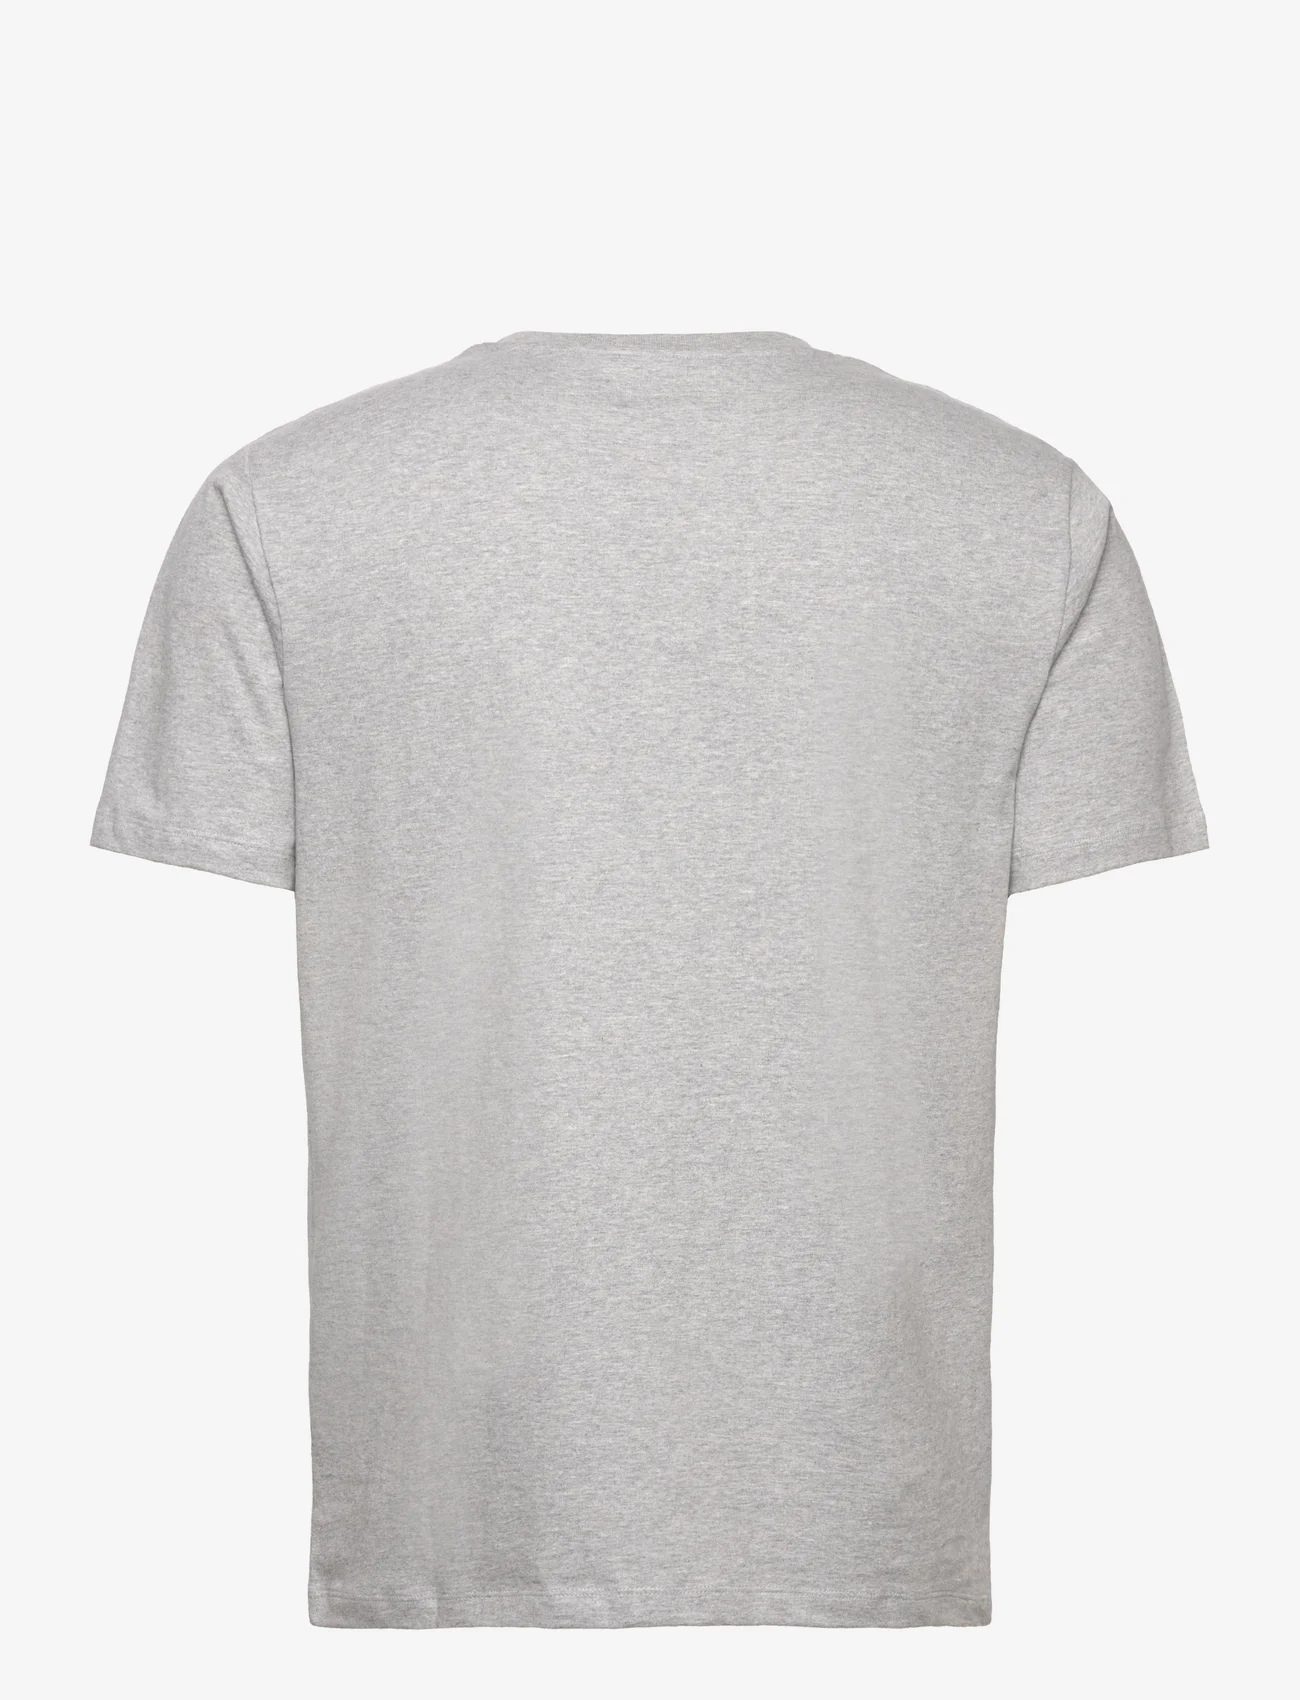 Double A by Wood Wood - Ace IVY T-shirt GOTS - t-shirts - grey melange - 1